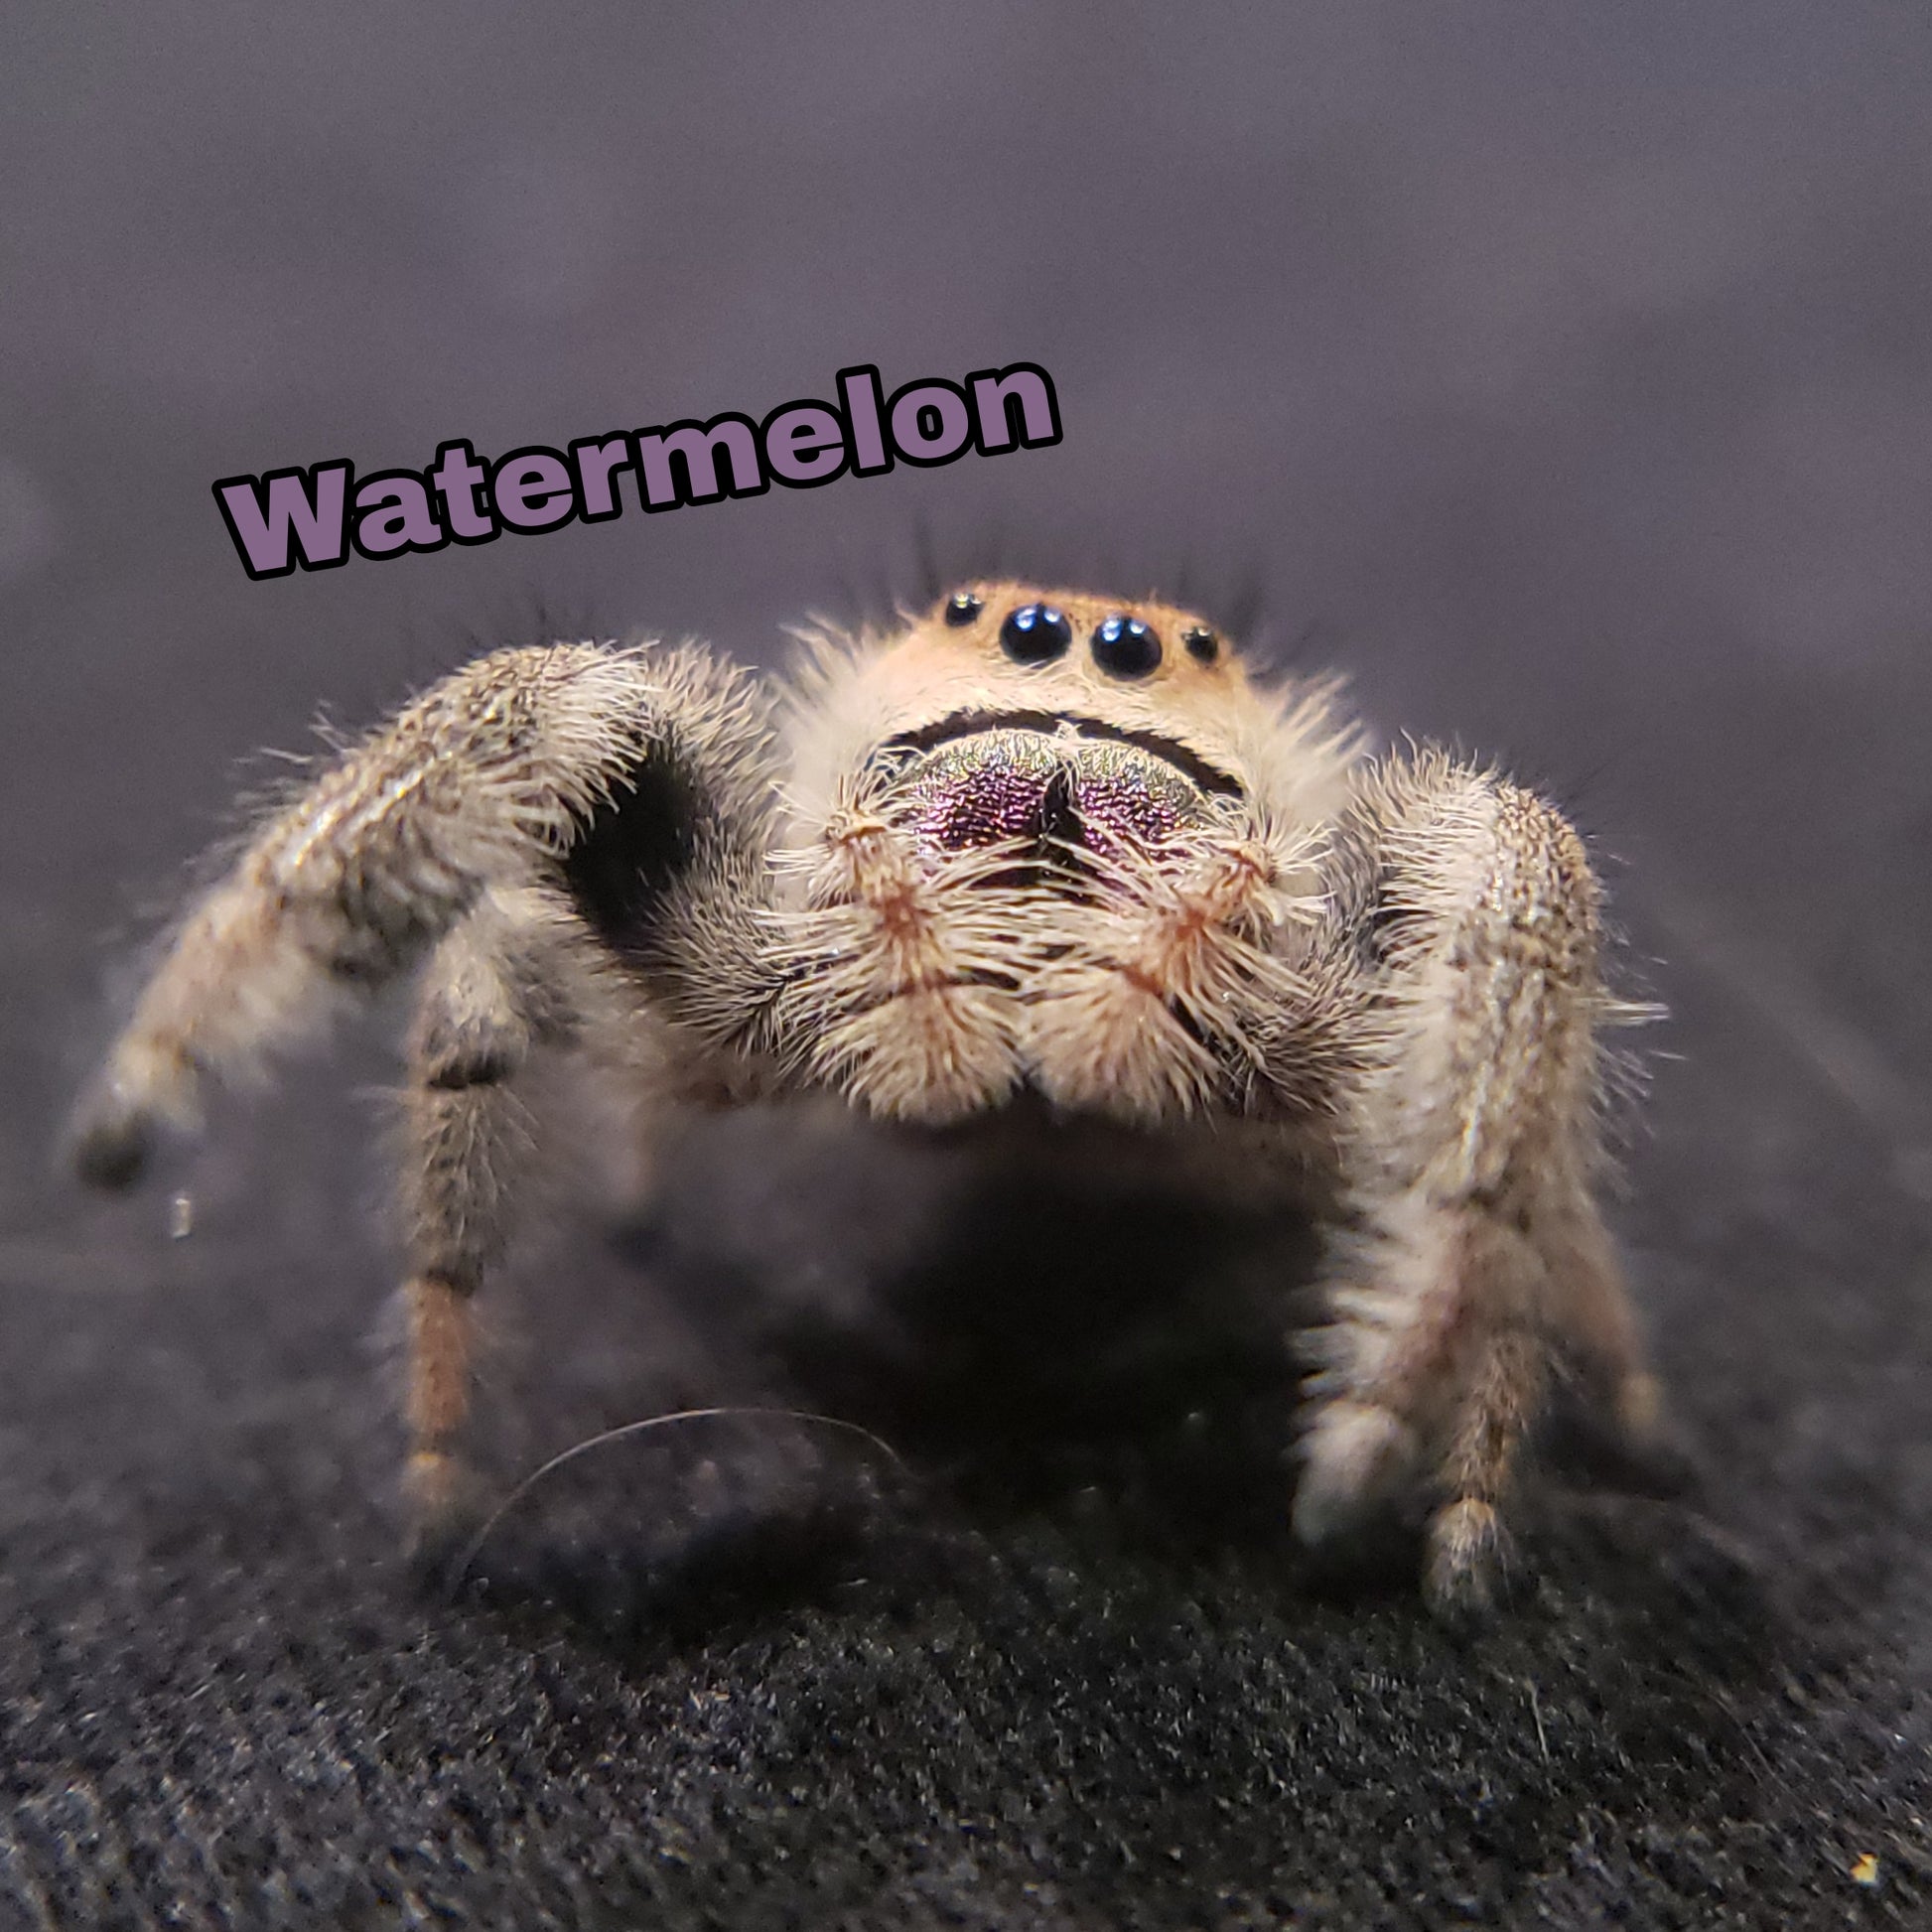 Regal Jumping Spider "Watermelon" - Jumping Spiders For Sale - Spiders Source - #1 Regal Jumping Spider Store